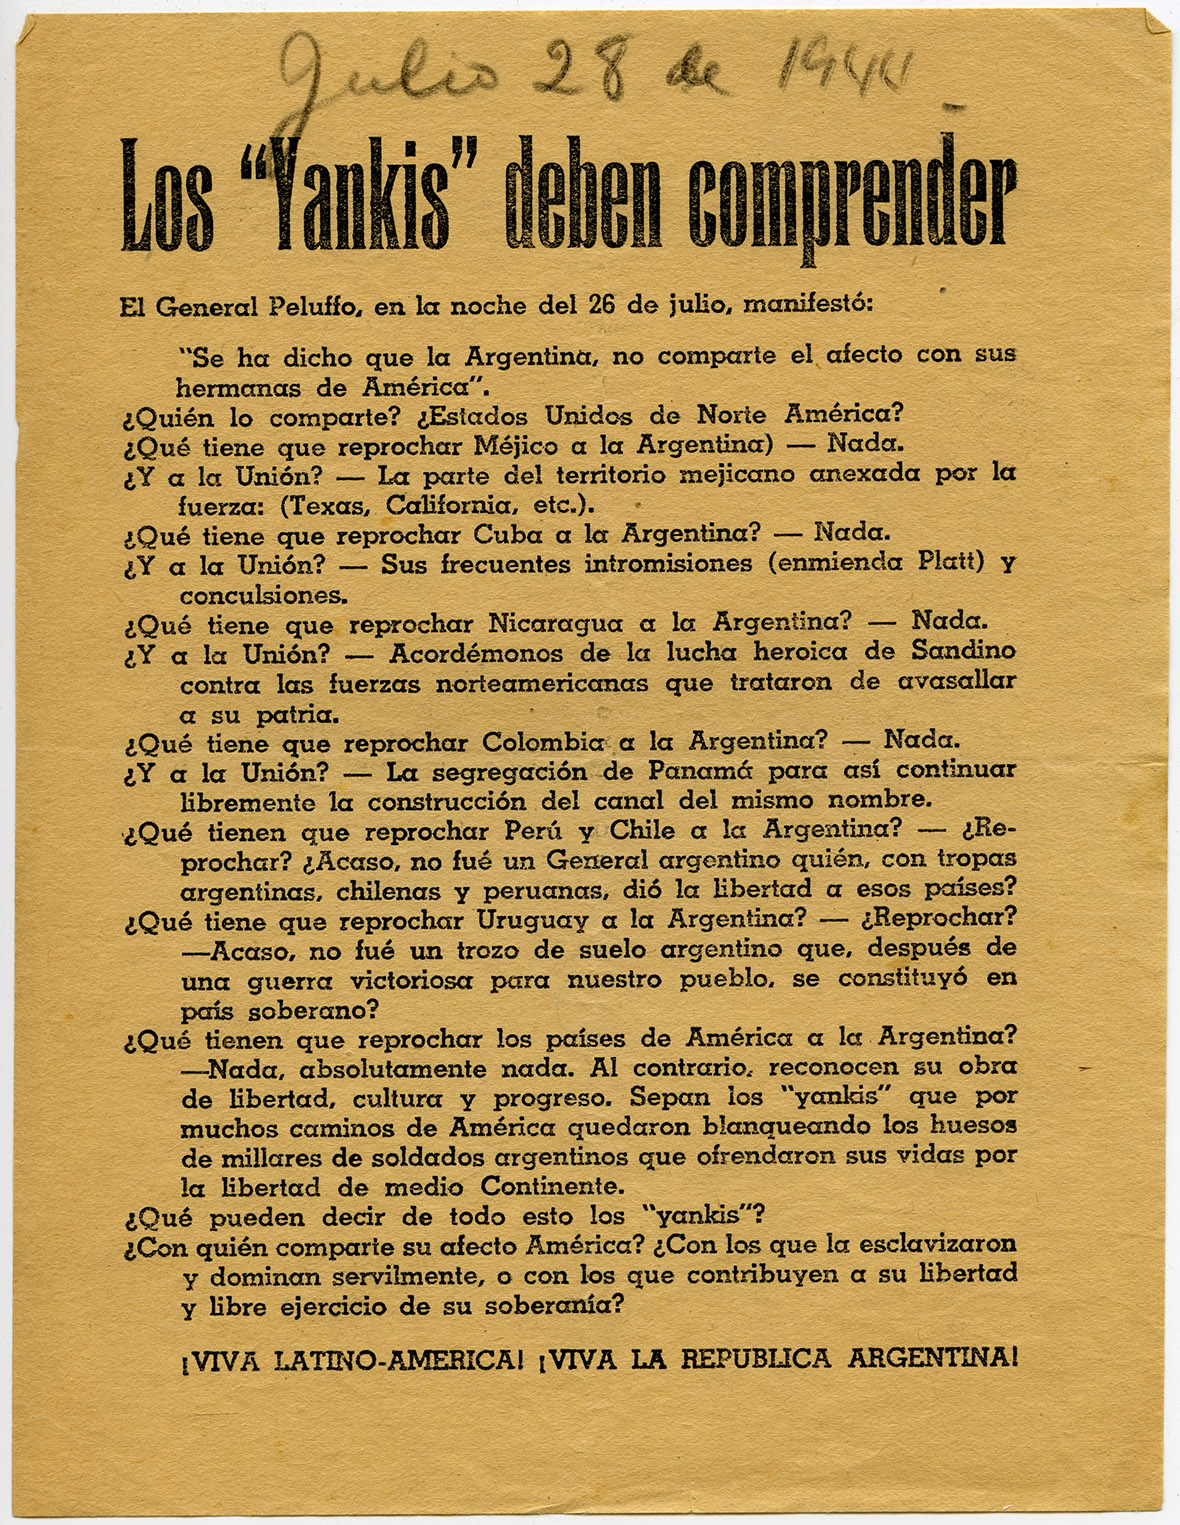 Anti-American handbill, 1944